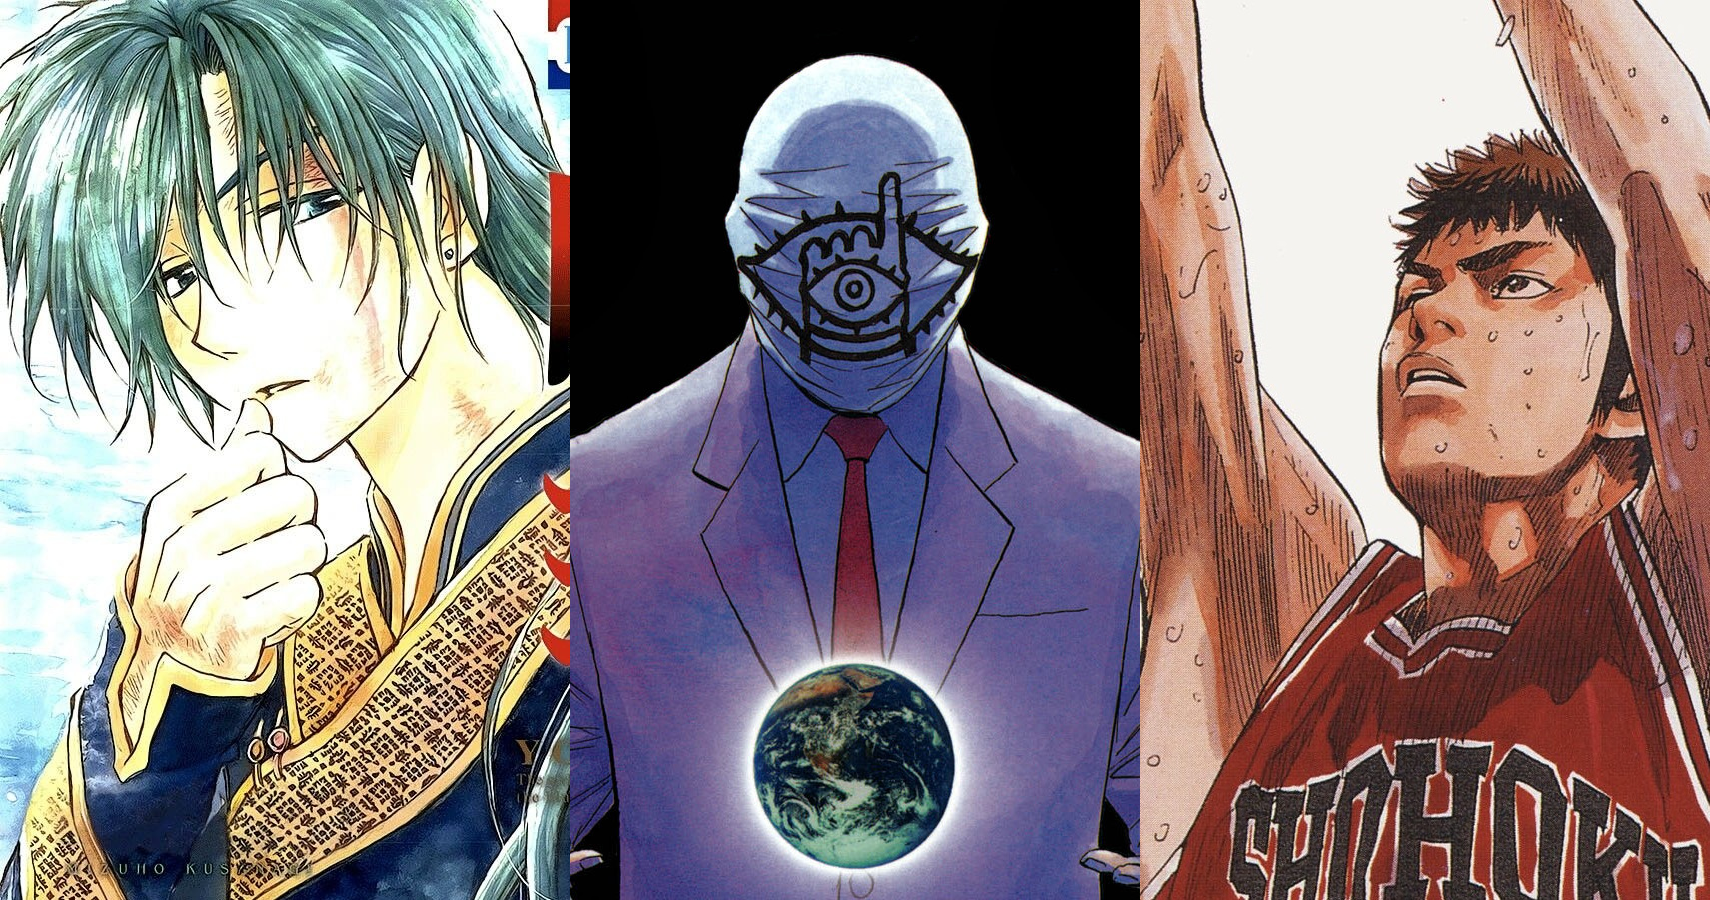 10 Most Popular Manga Releases From Viz Media (According To MyAnimeList)